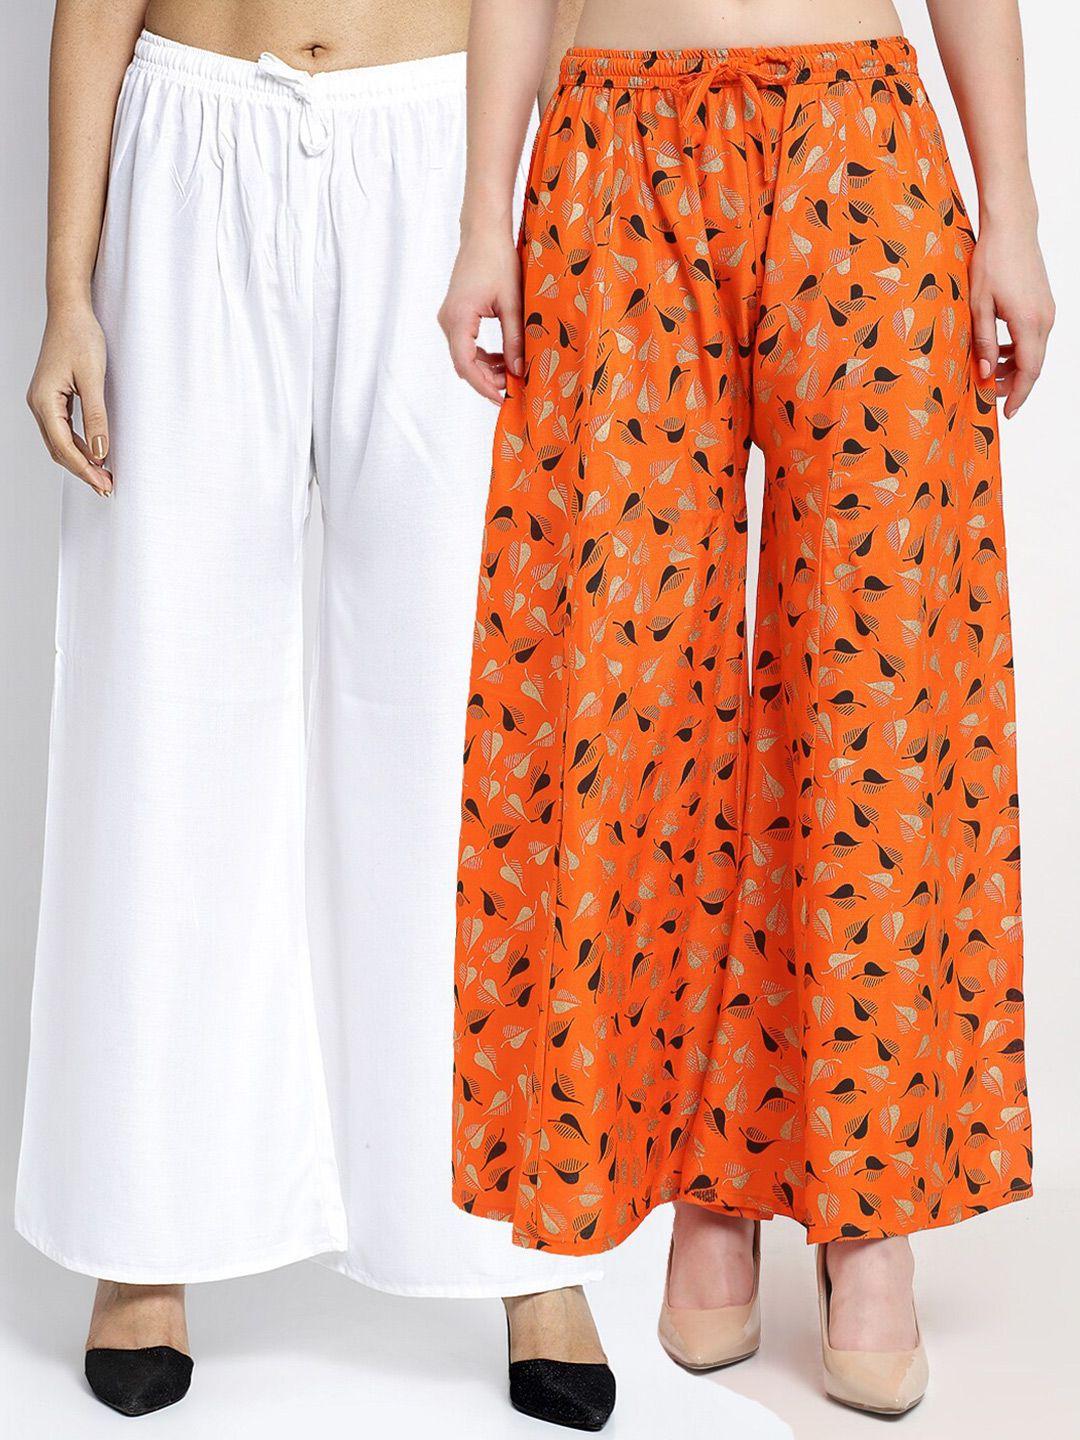 gracit-women-set-of-2-white-&-orange-printed-palazzos